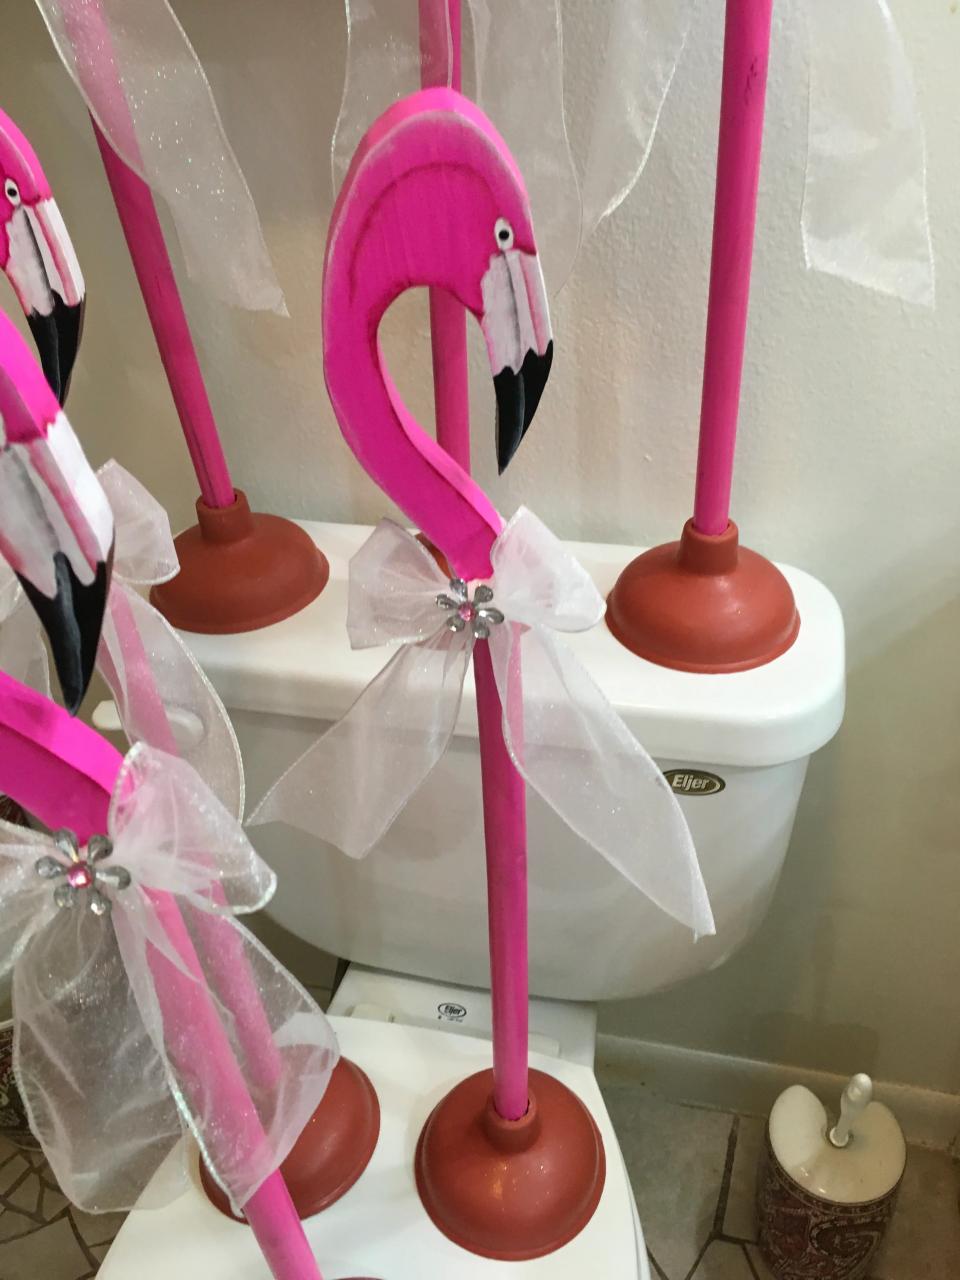 Plunger Flamingo Florida Hot Pink Upcycled Bathroom Decor Handmade